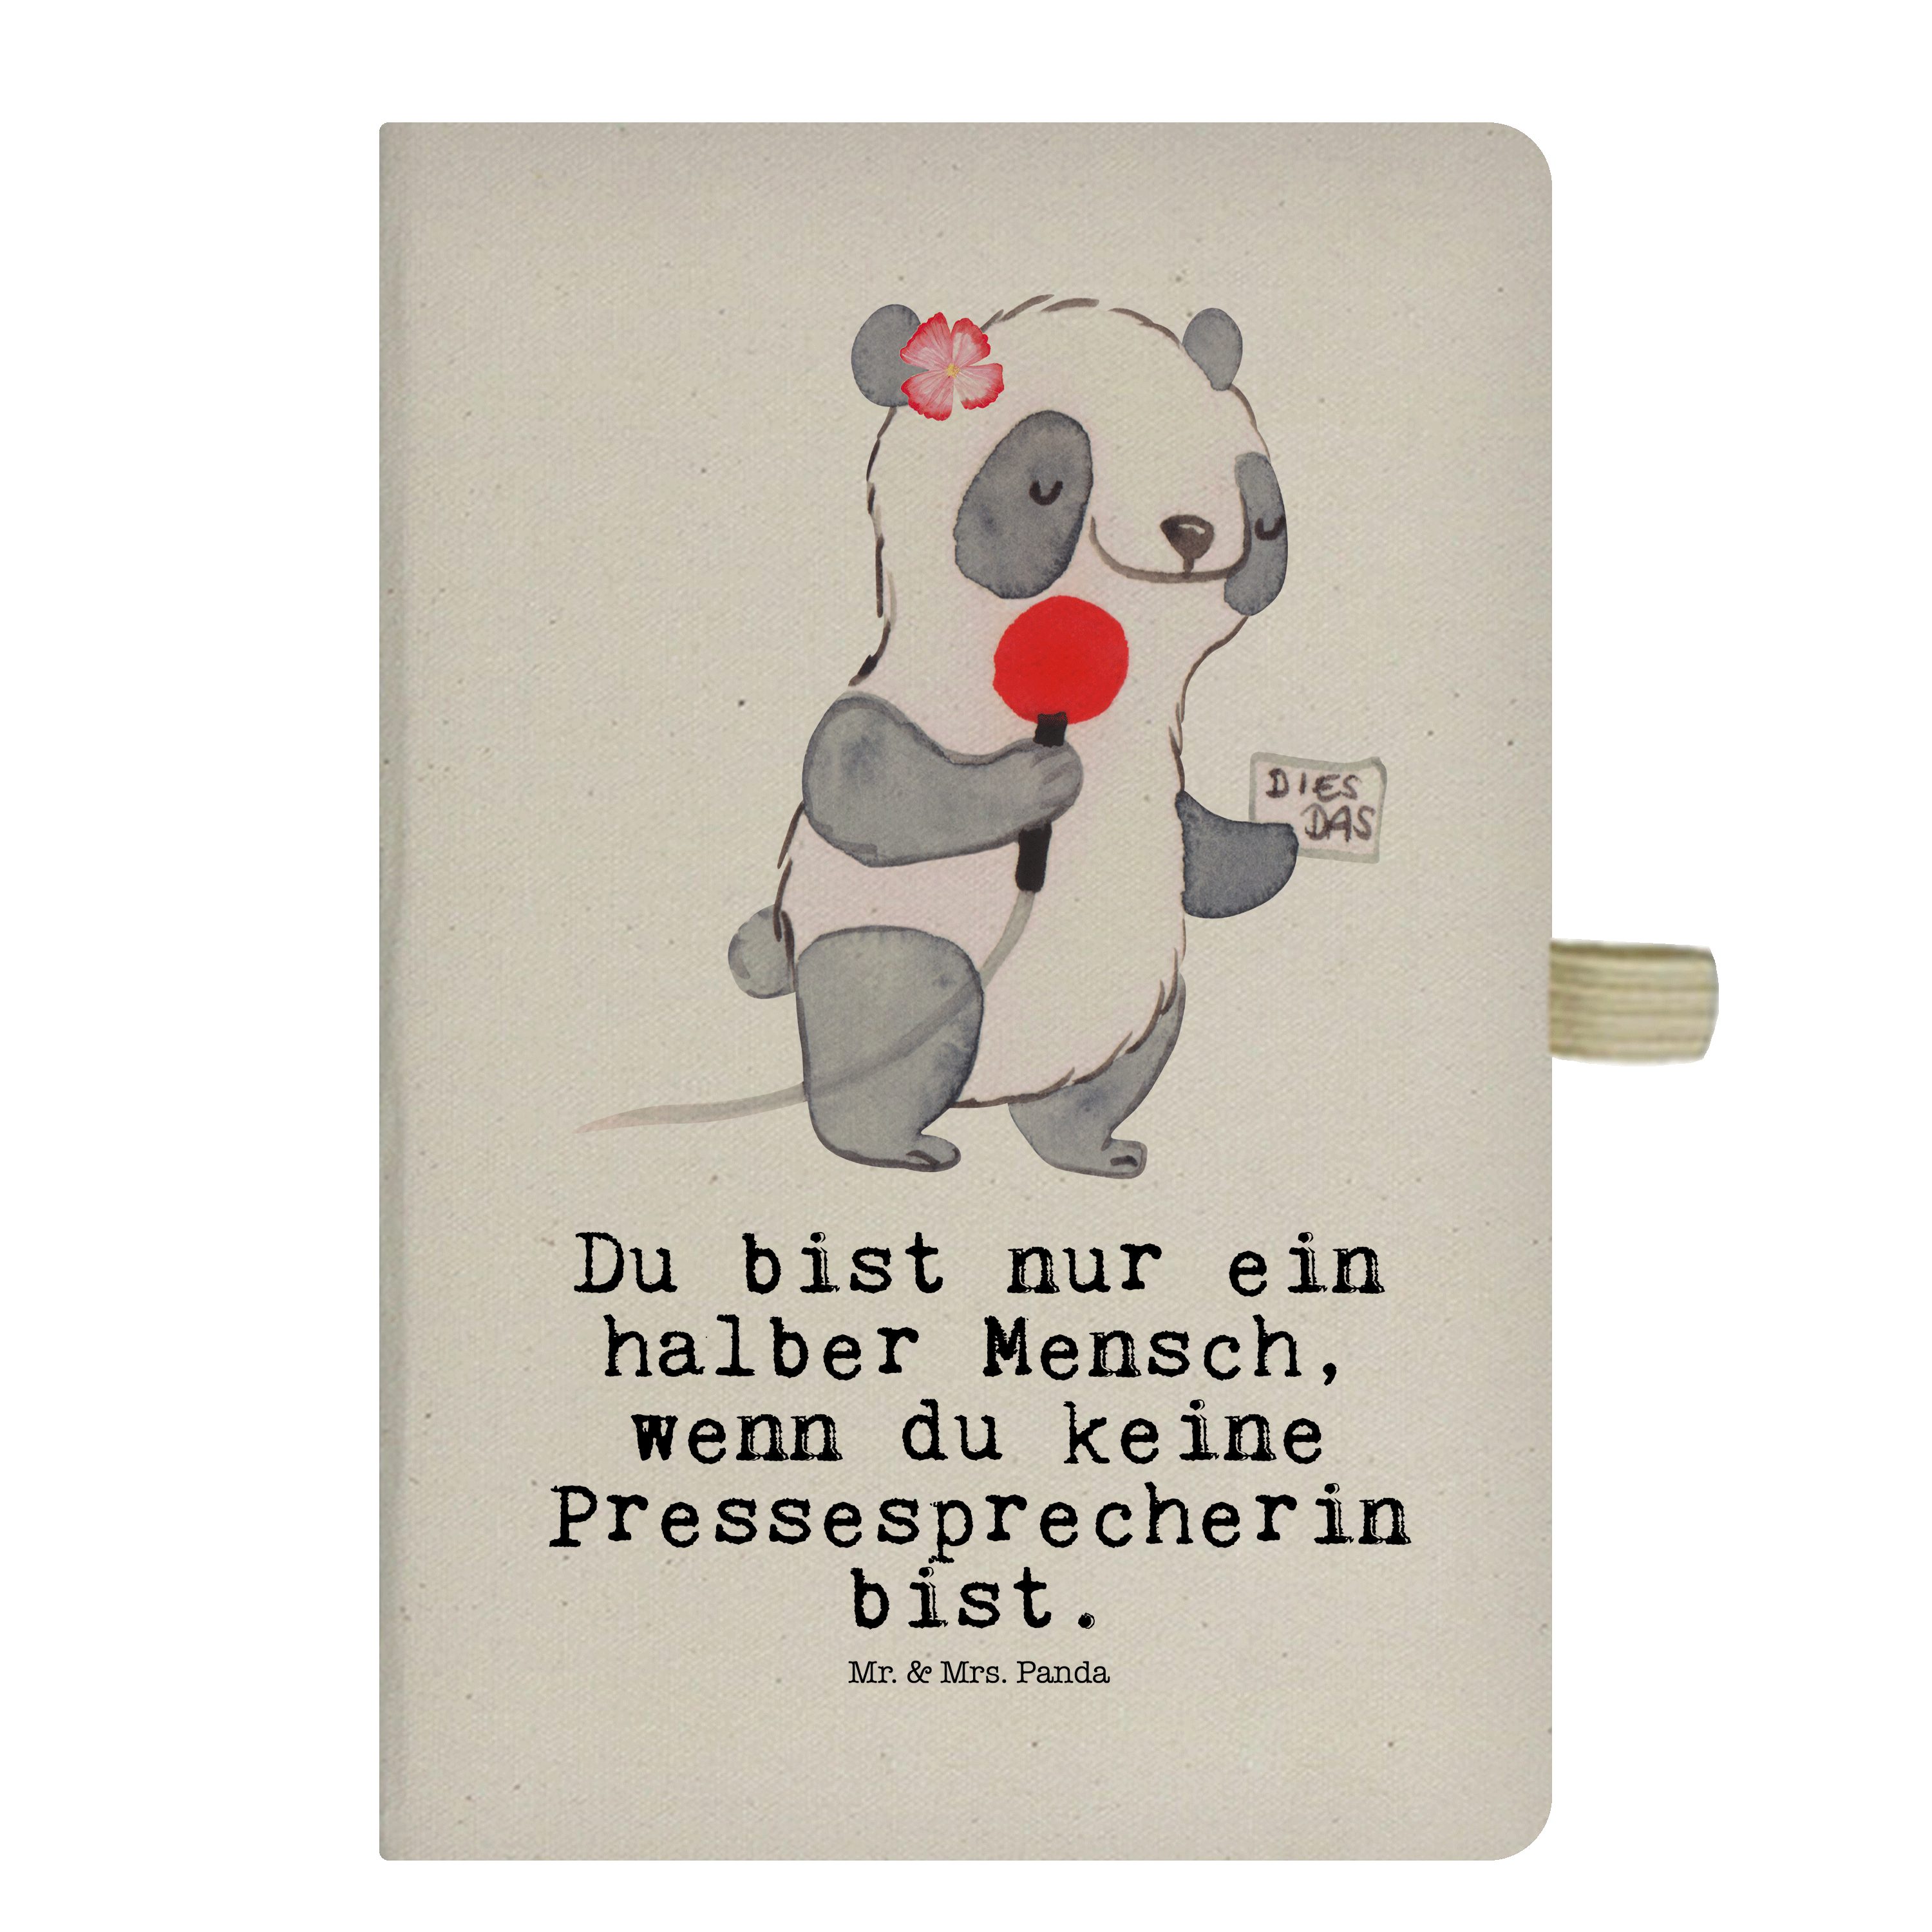 Mr. & Mrs. Panda Notizbuch & Journal, Mr. Panda - Pressesprecherin Mrs. Herz - mit Geschenk, Transparent Notizen